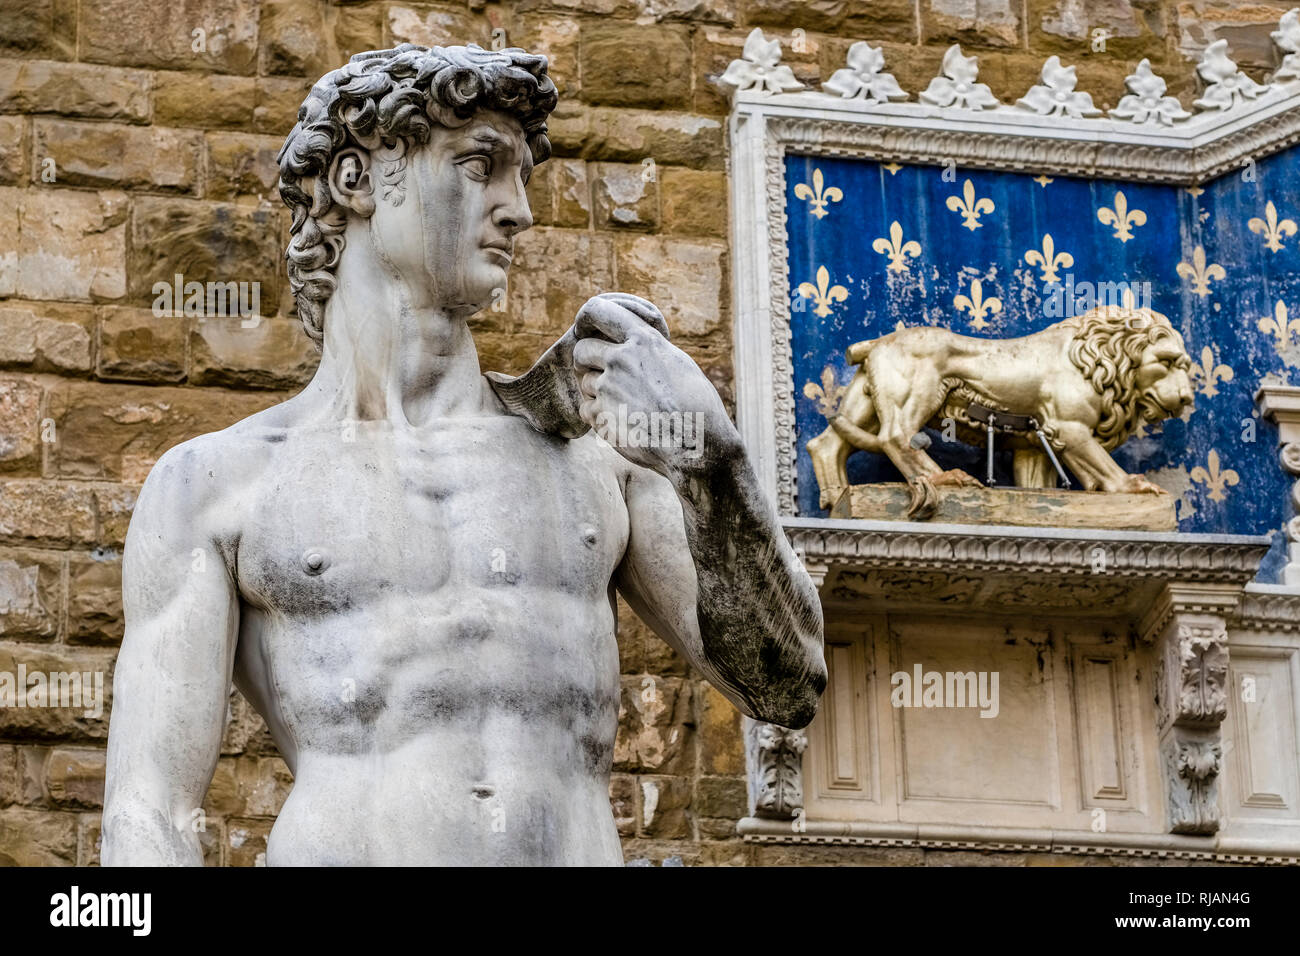 A copy statue of Michelangelo's David at the entrance of the Palazzo Vecchio Stock Photo